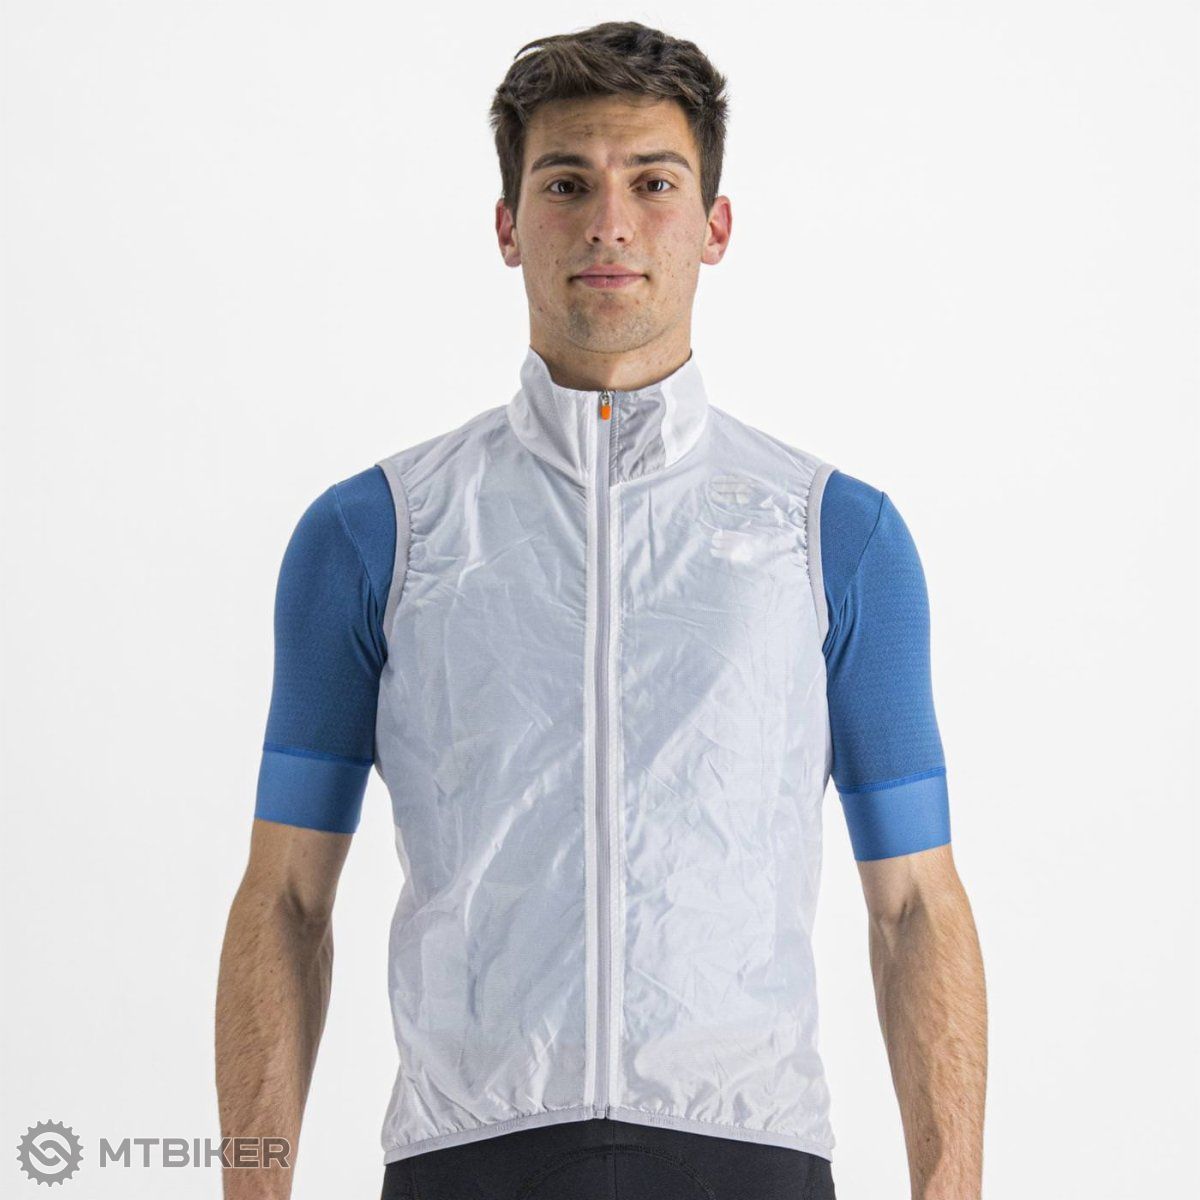 Sportful Hot Pack EasyLight vest, white - MTBIKER.shop